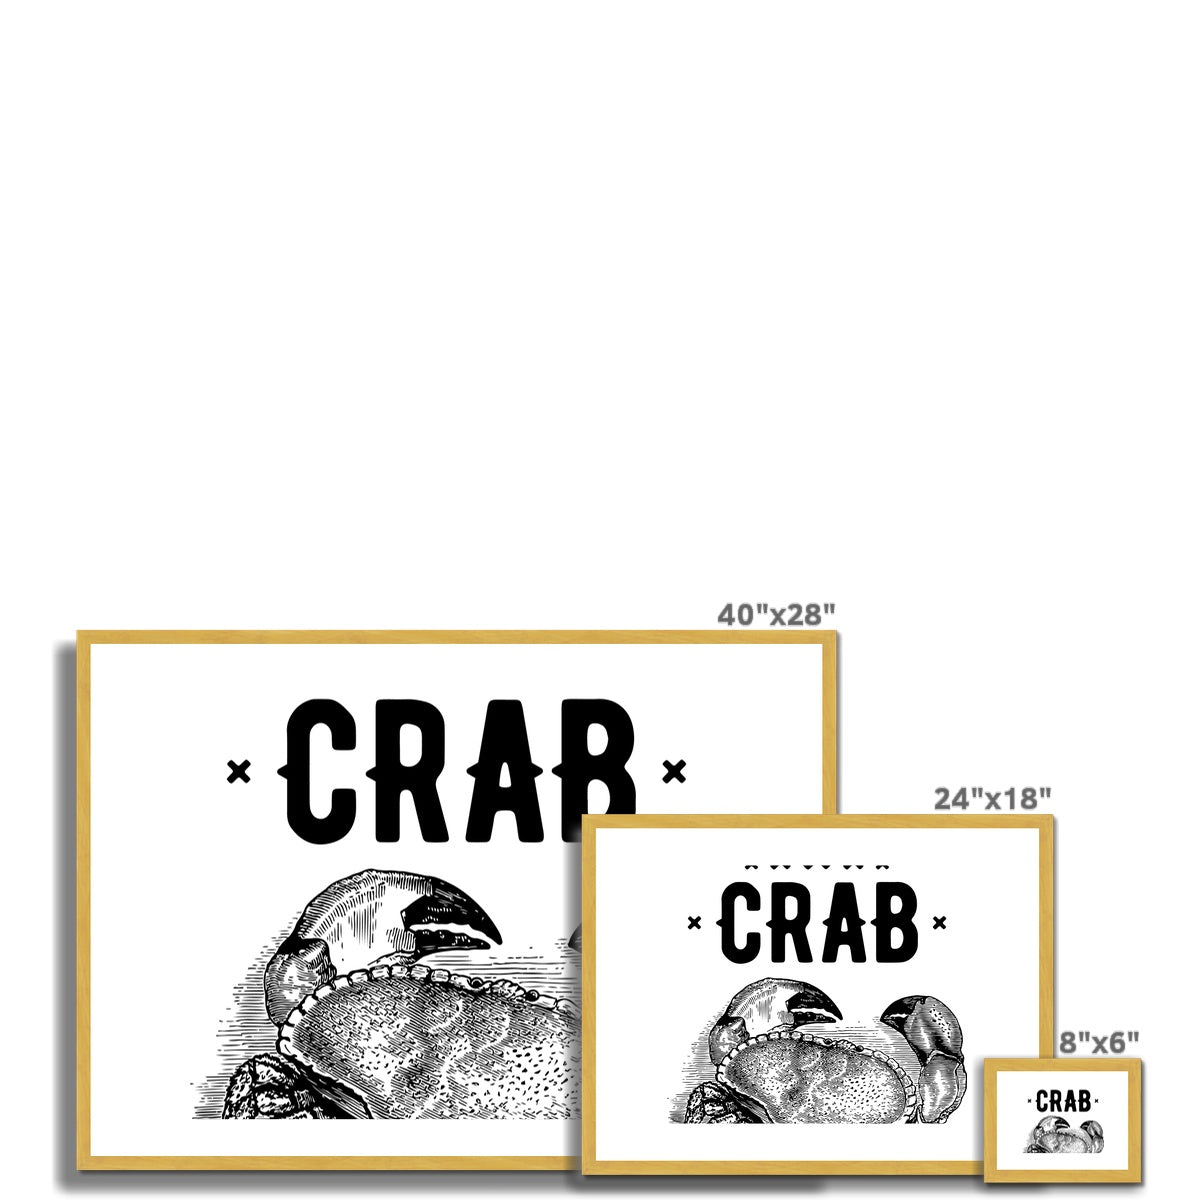 AQUA B&W - 07 - Catch the crab - Antique Framed & Mounted Print